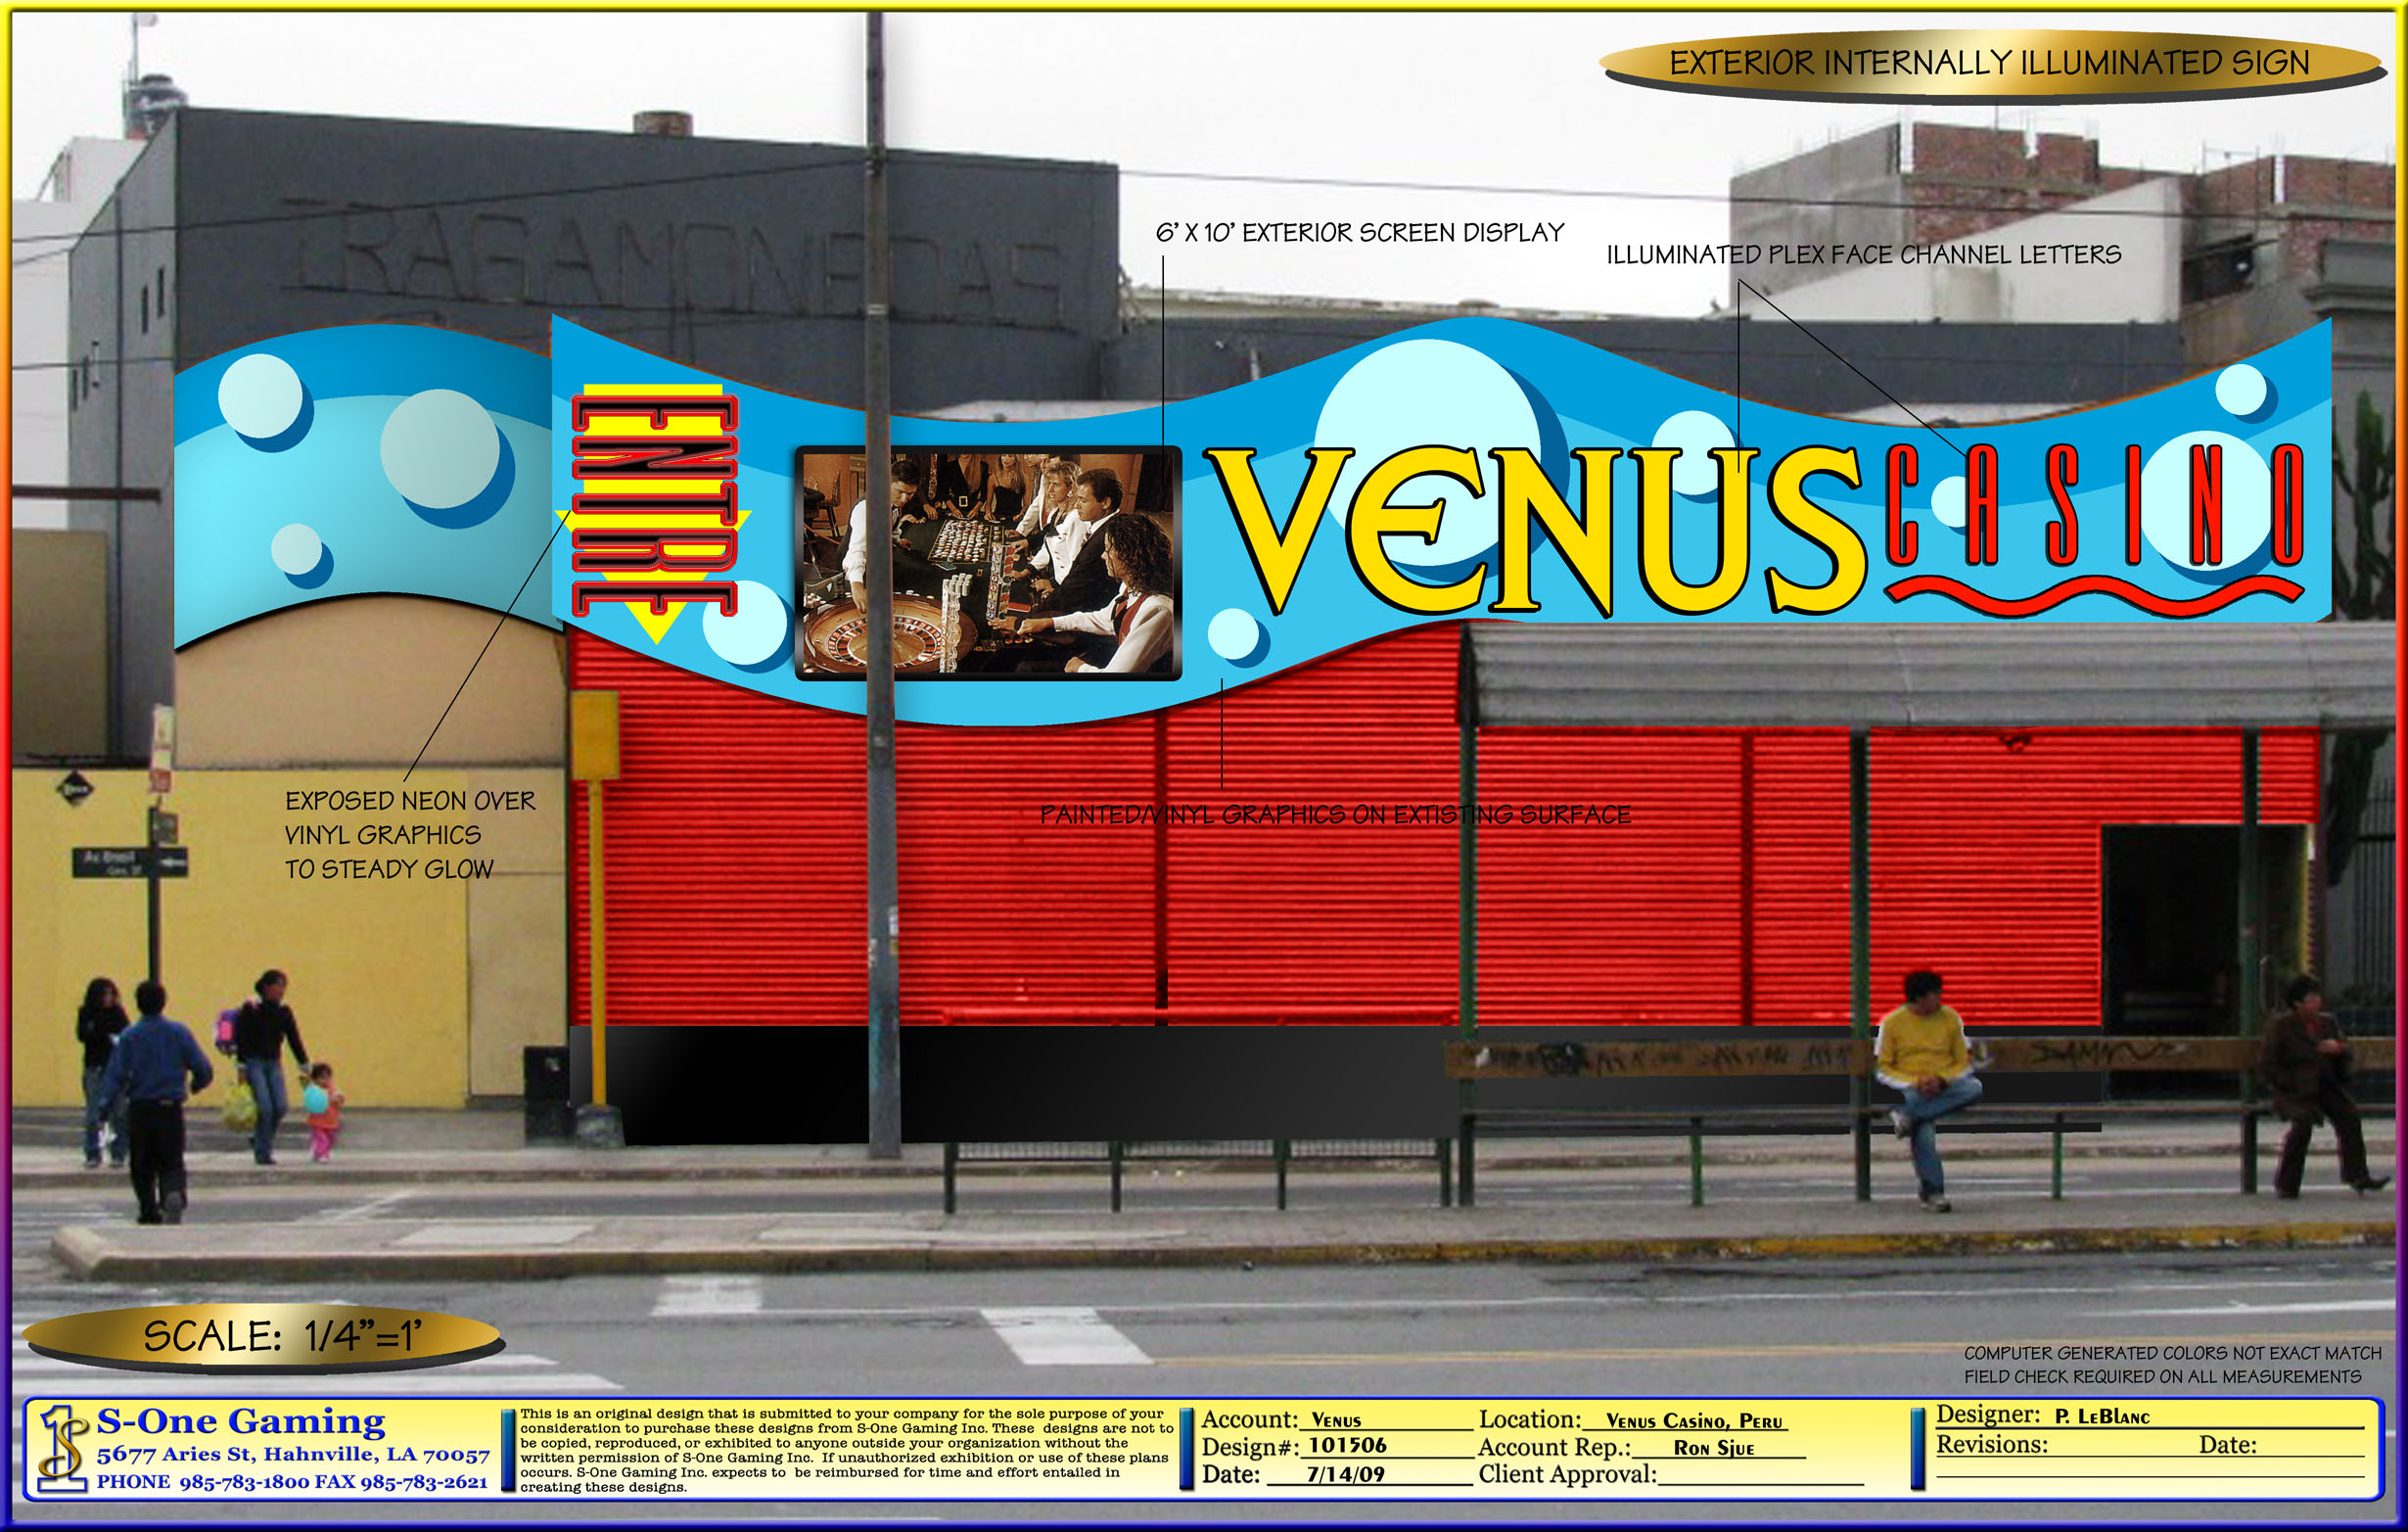 101506 VENUS exterior sign.jpg